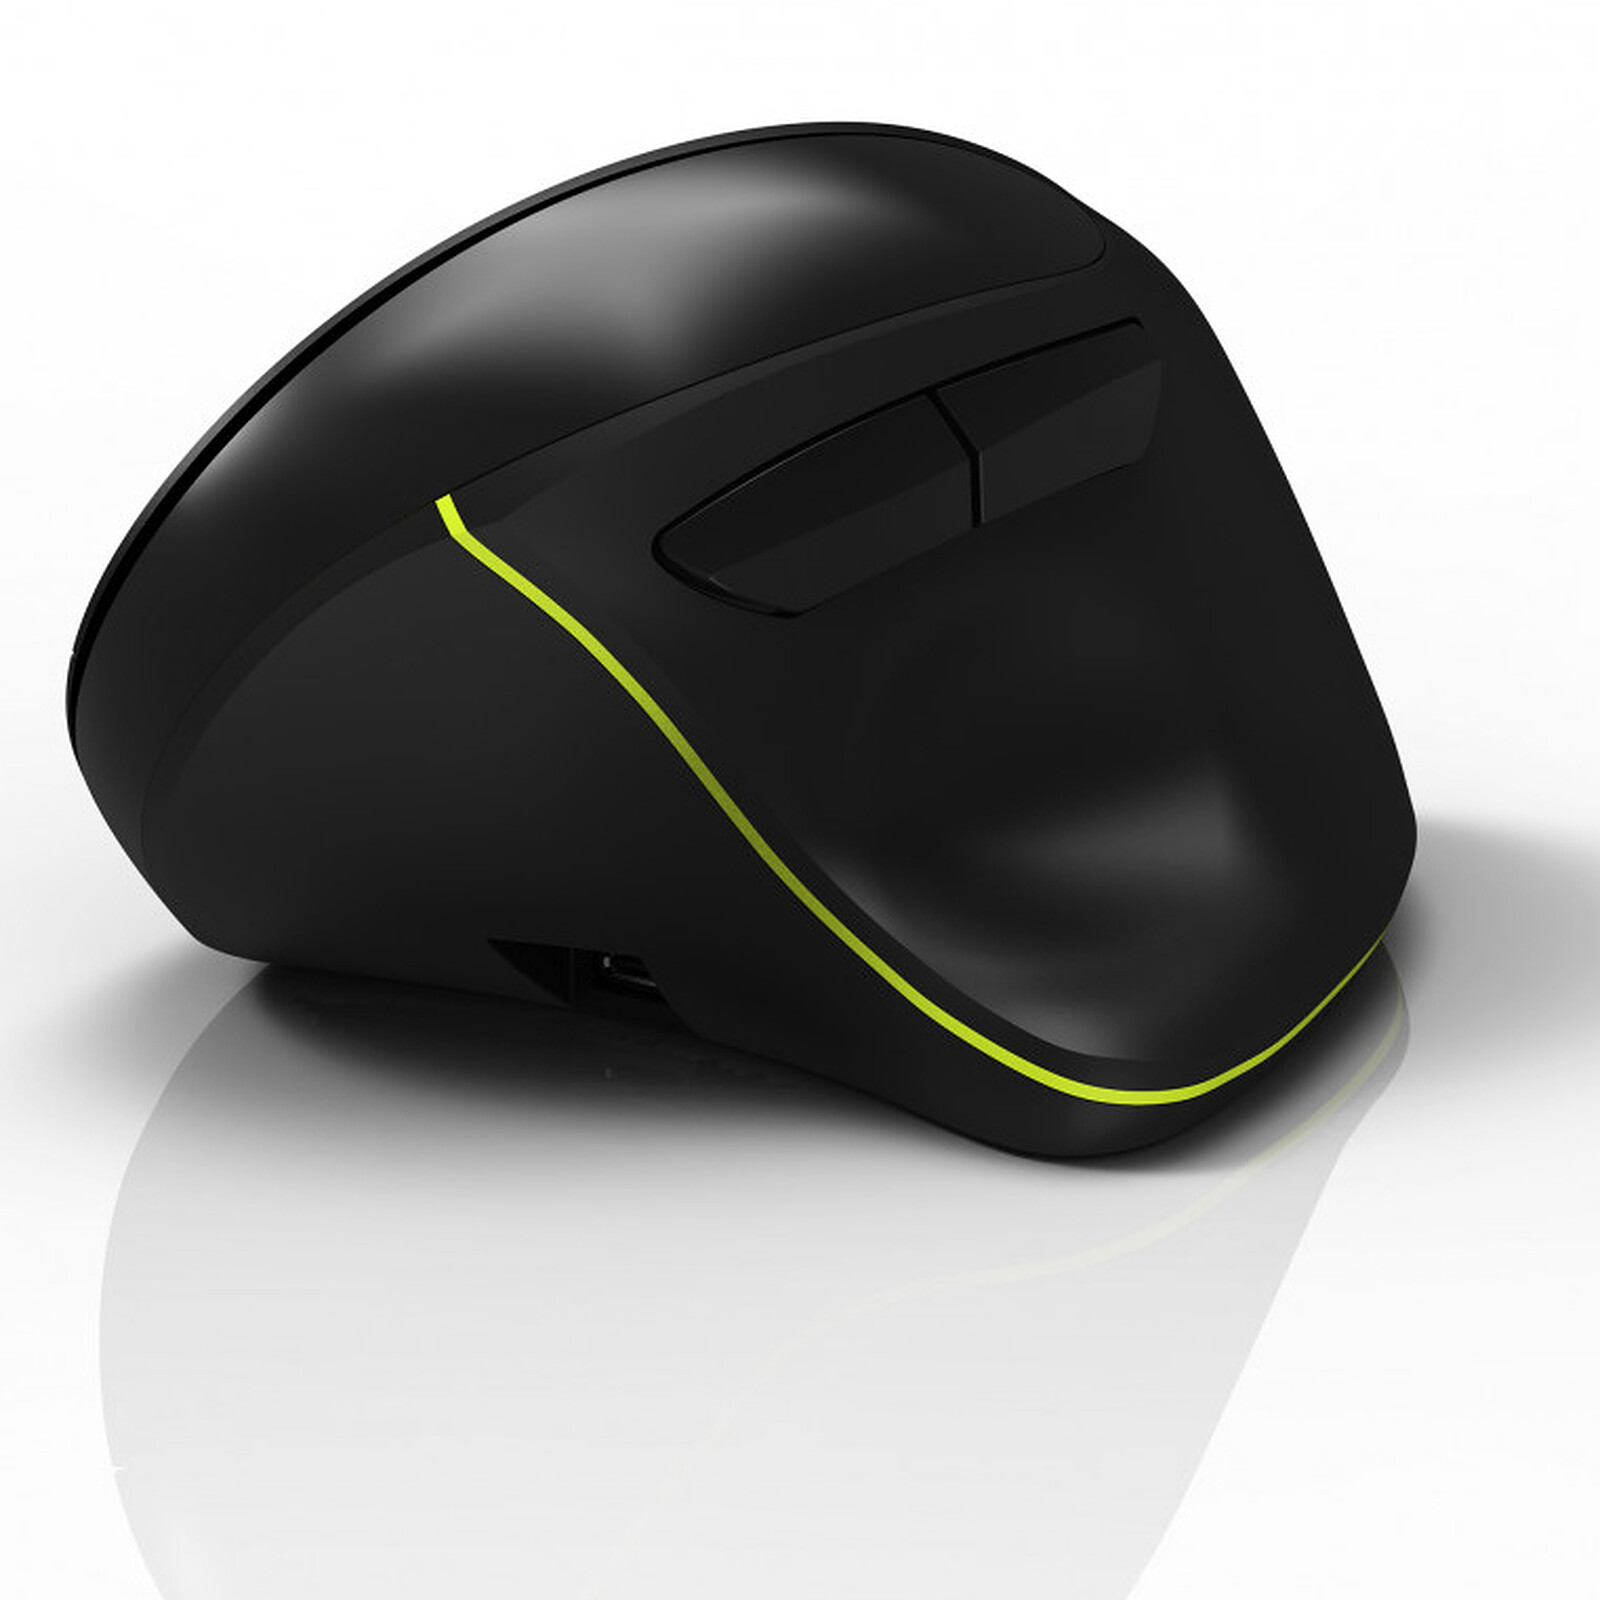 Mouse ergonomico Bluetooth senza fili e ricaricabile PORT Connect - Mouse -  Garanzia 3 anni LDLC